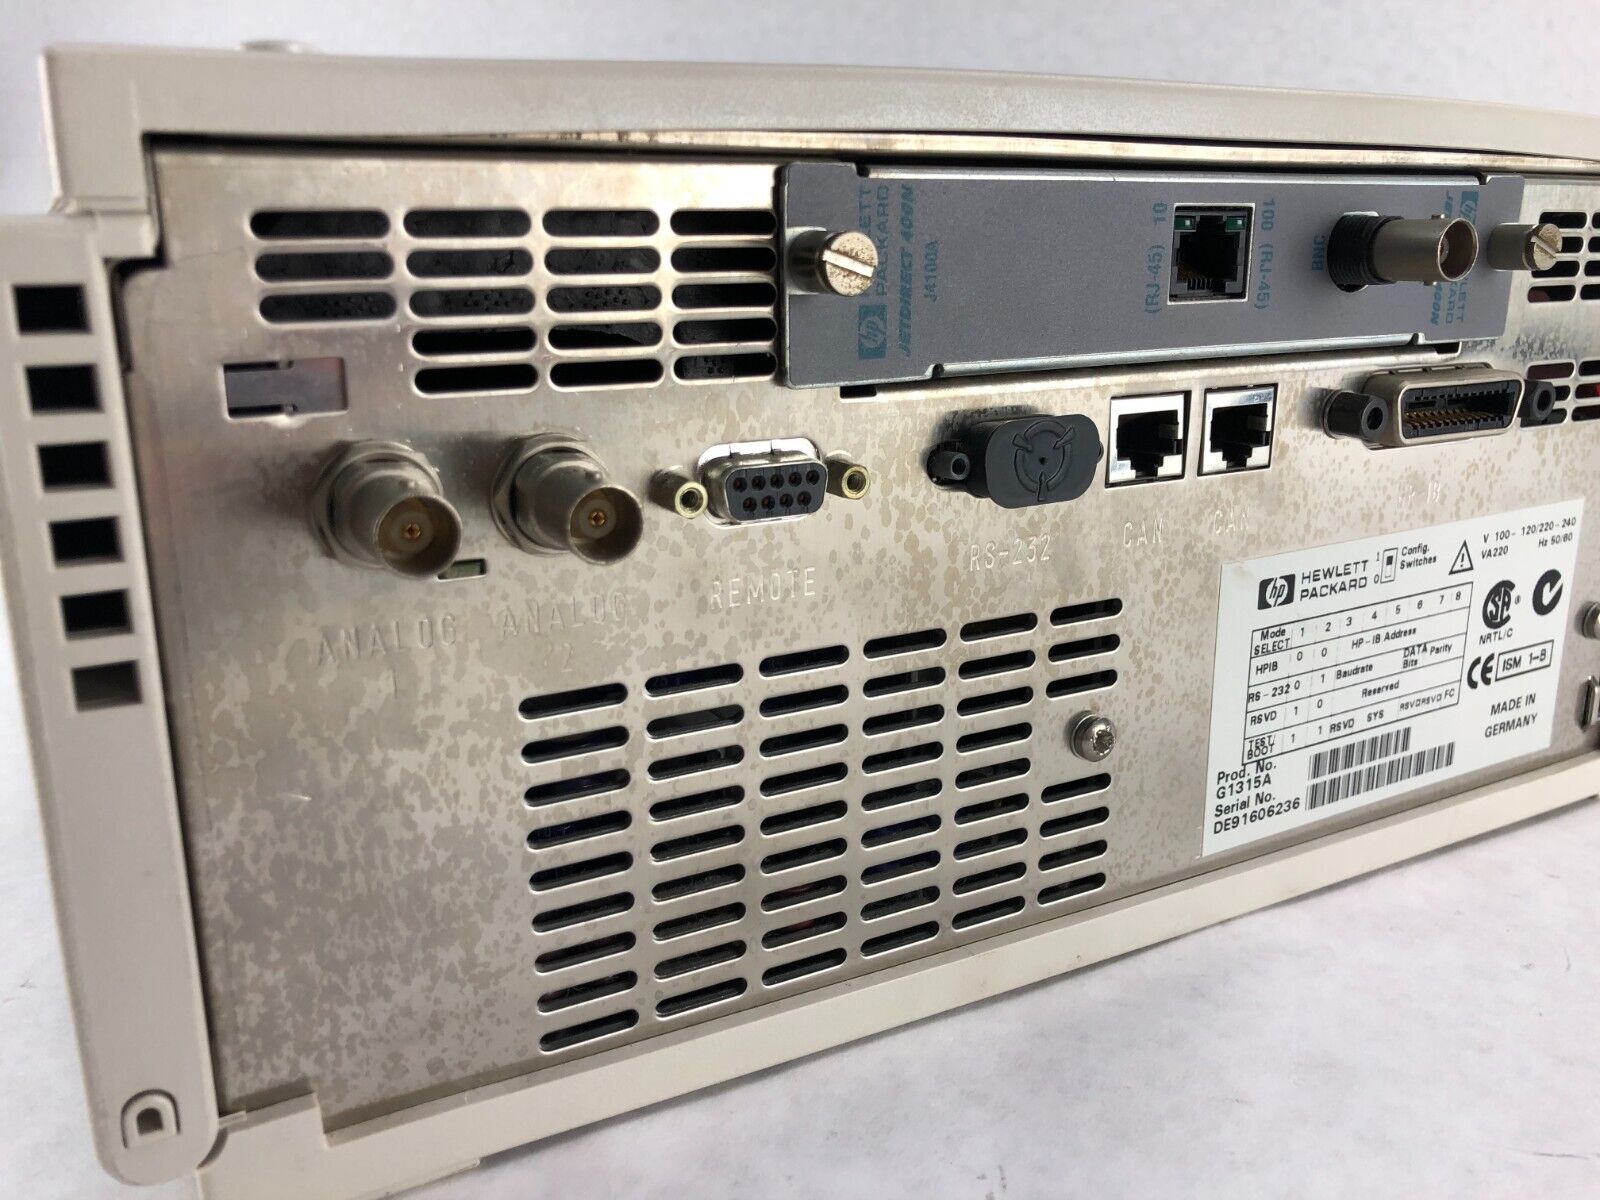 Hewlett Packard Agilent Series 1100 G1315A Diode Array Detector - Bad Main Board